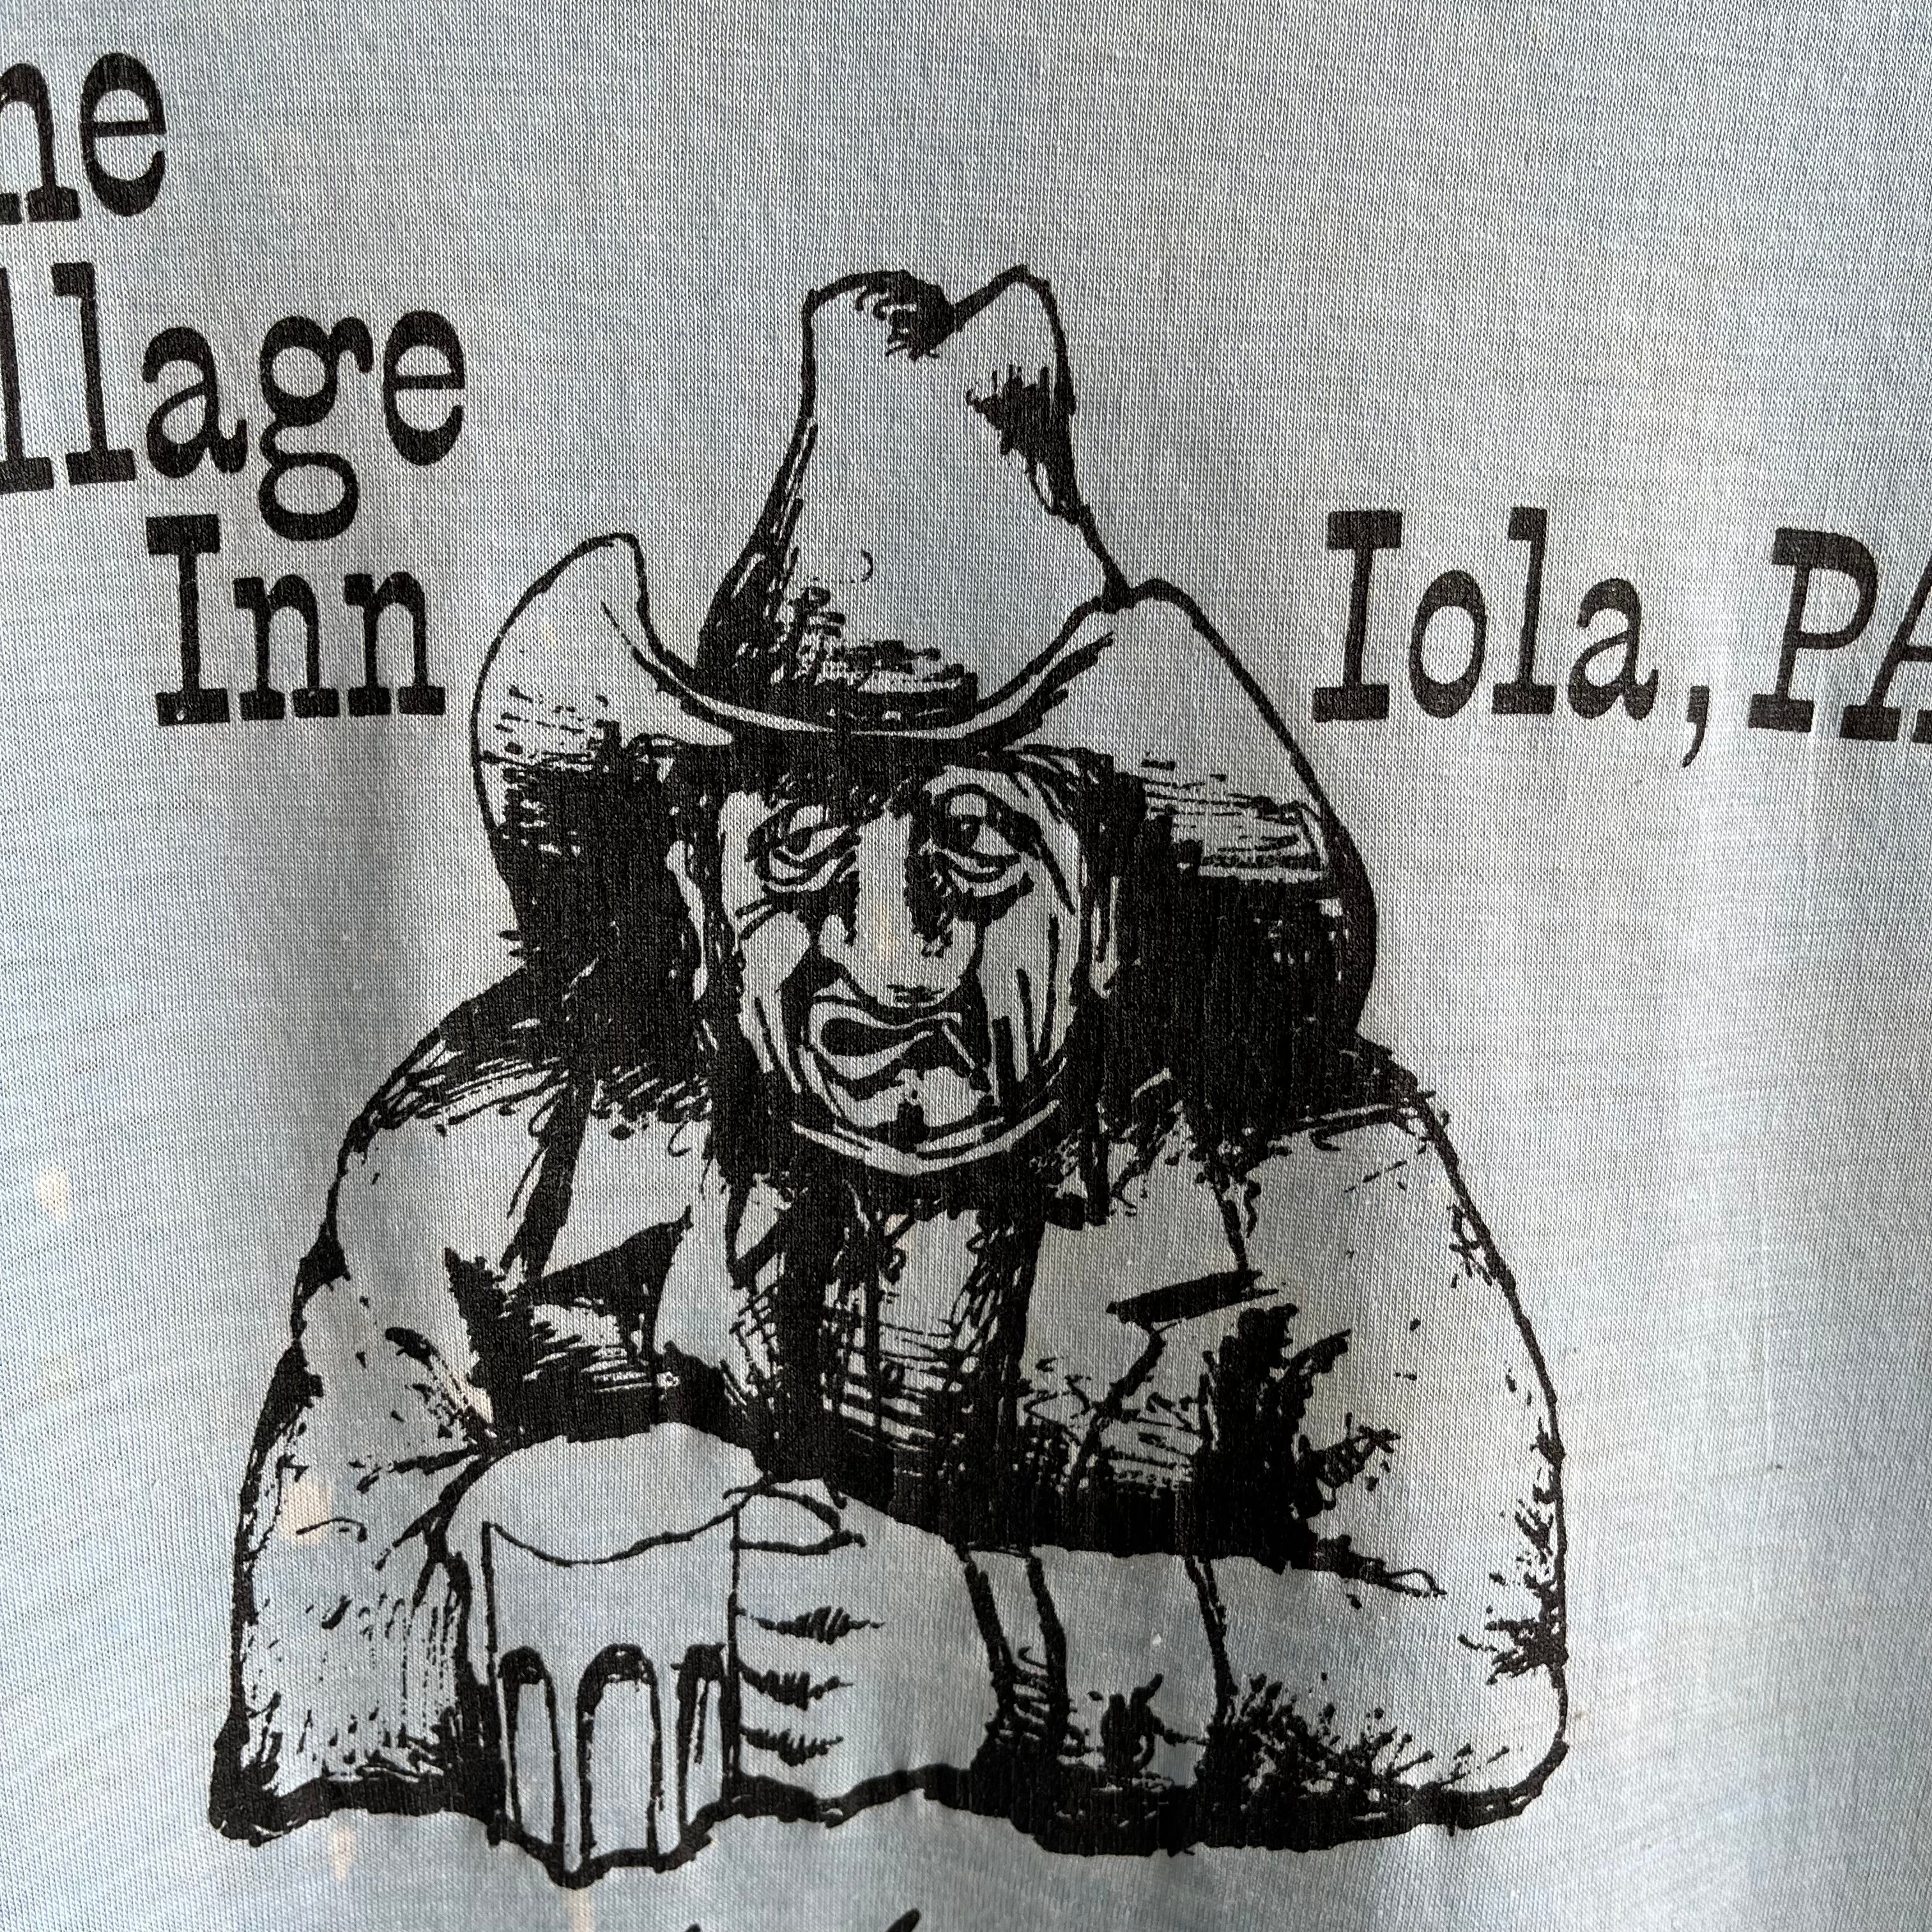 1970/80s The Village Inn - Iola, PA Epic T-Shirt